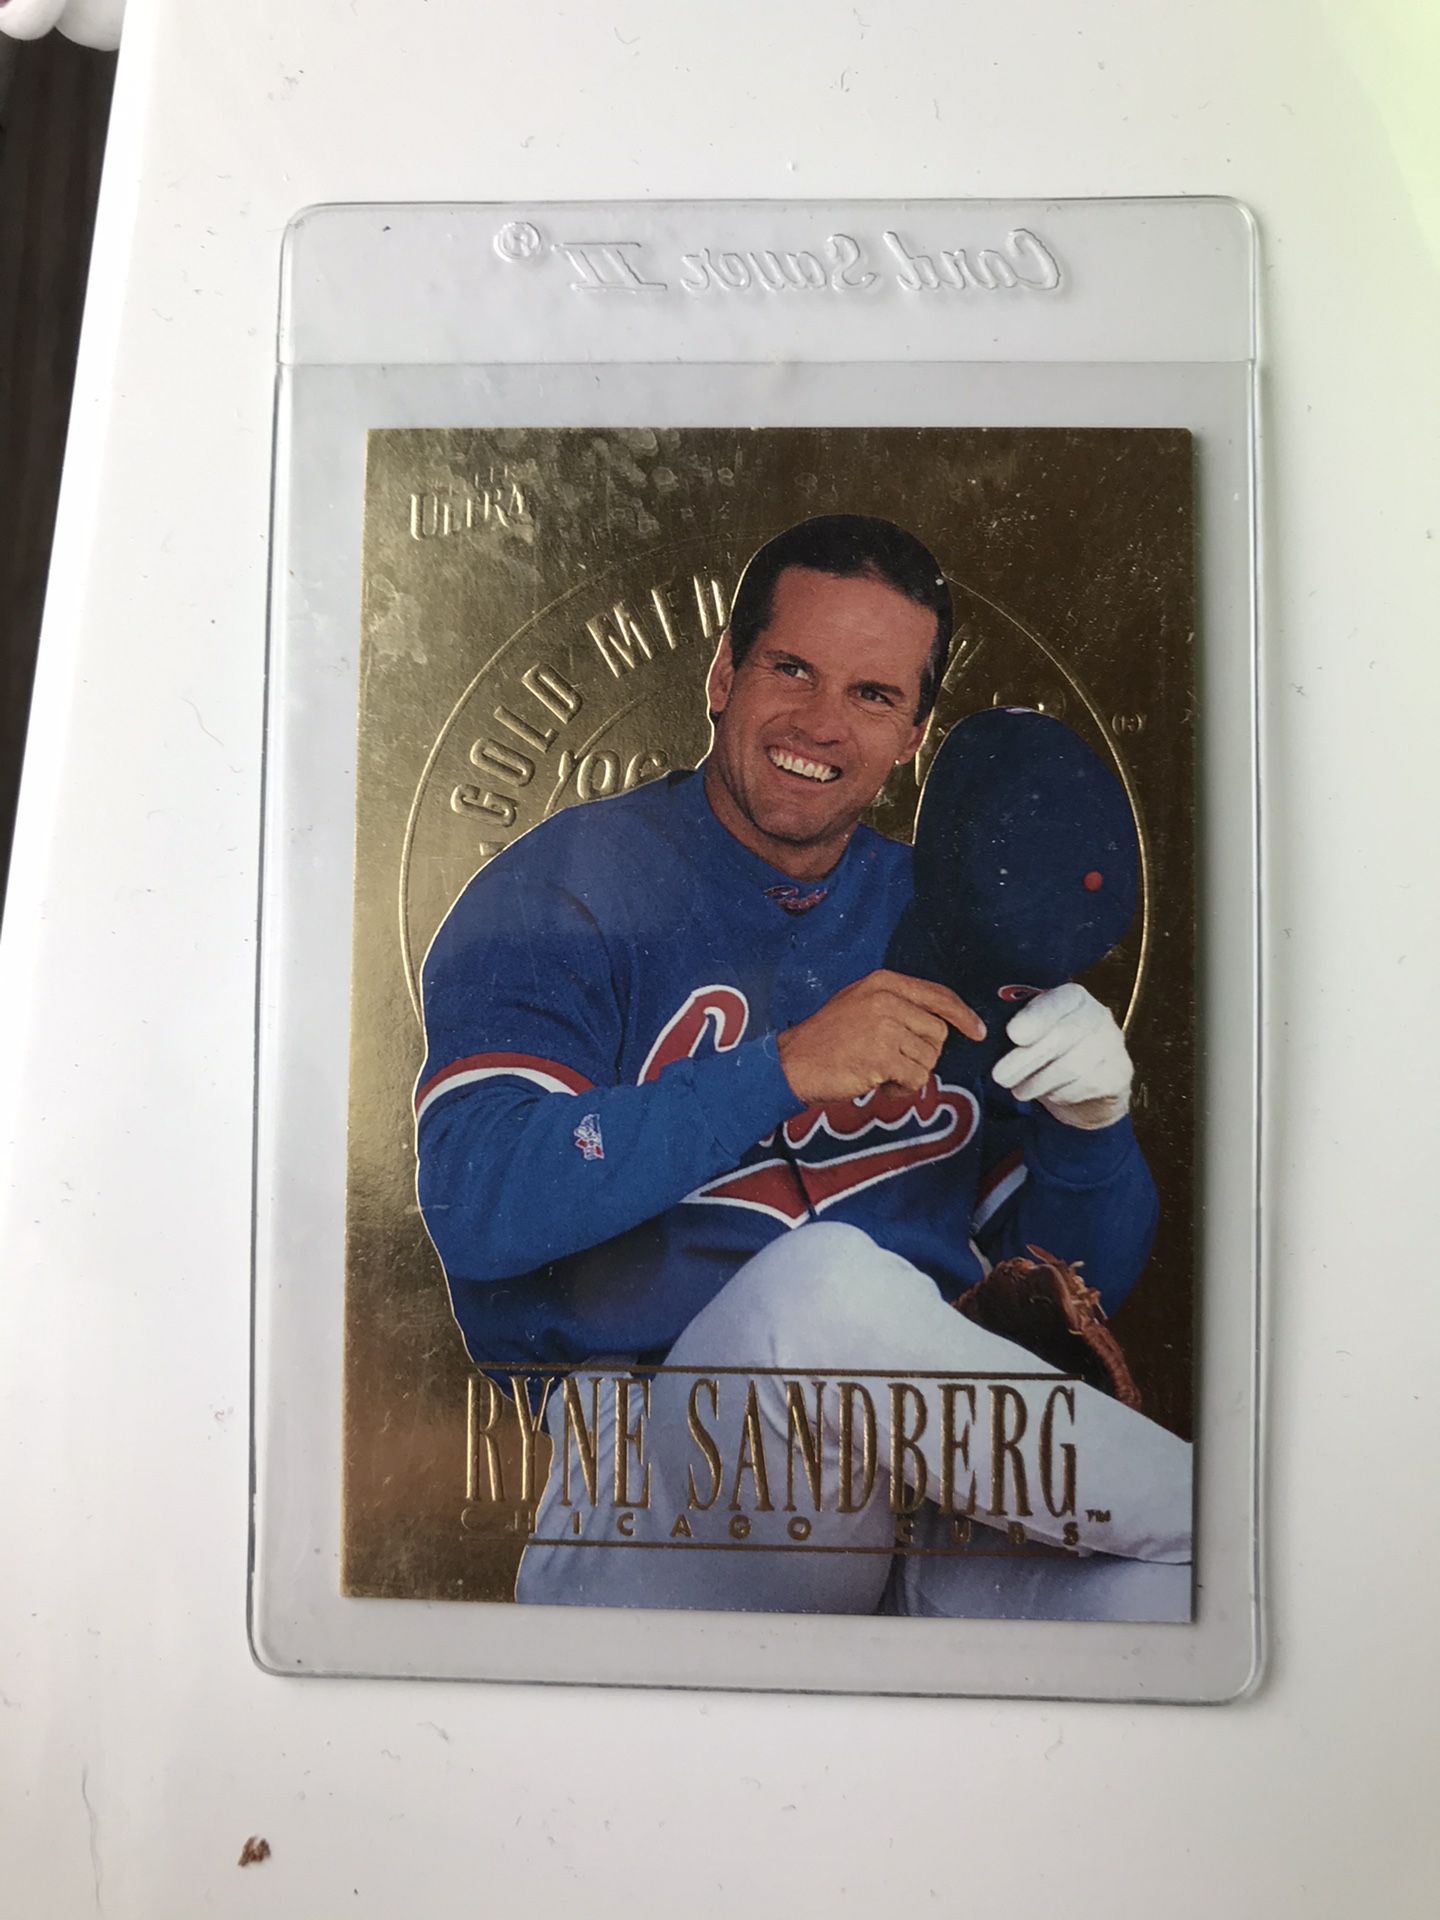 Ryne Sandburg Gold Baseball card!